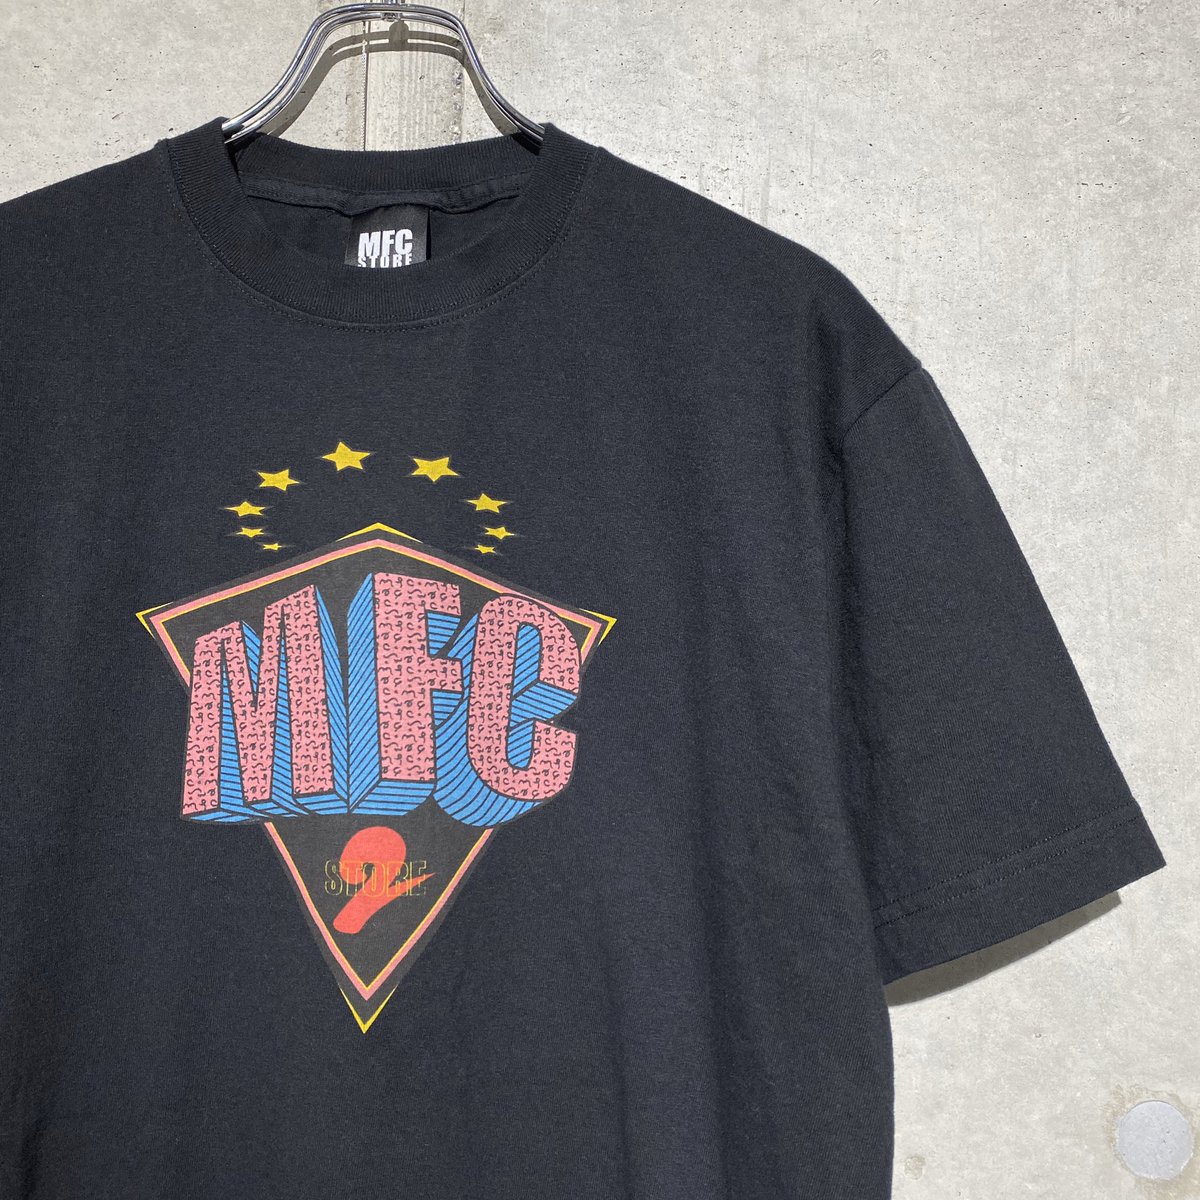 Mfc Store Mfc Store 2nd Anniversary Sway Tee好評発売中 Ldh に所属のsway Doberman Infinity がmfc Storeの2周年の記念logoを制作した商品になります 本日05 06 23 59までの発売になります T Co Mvulyayr8p T Co Veou5sbyn2